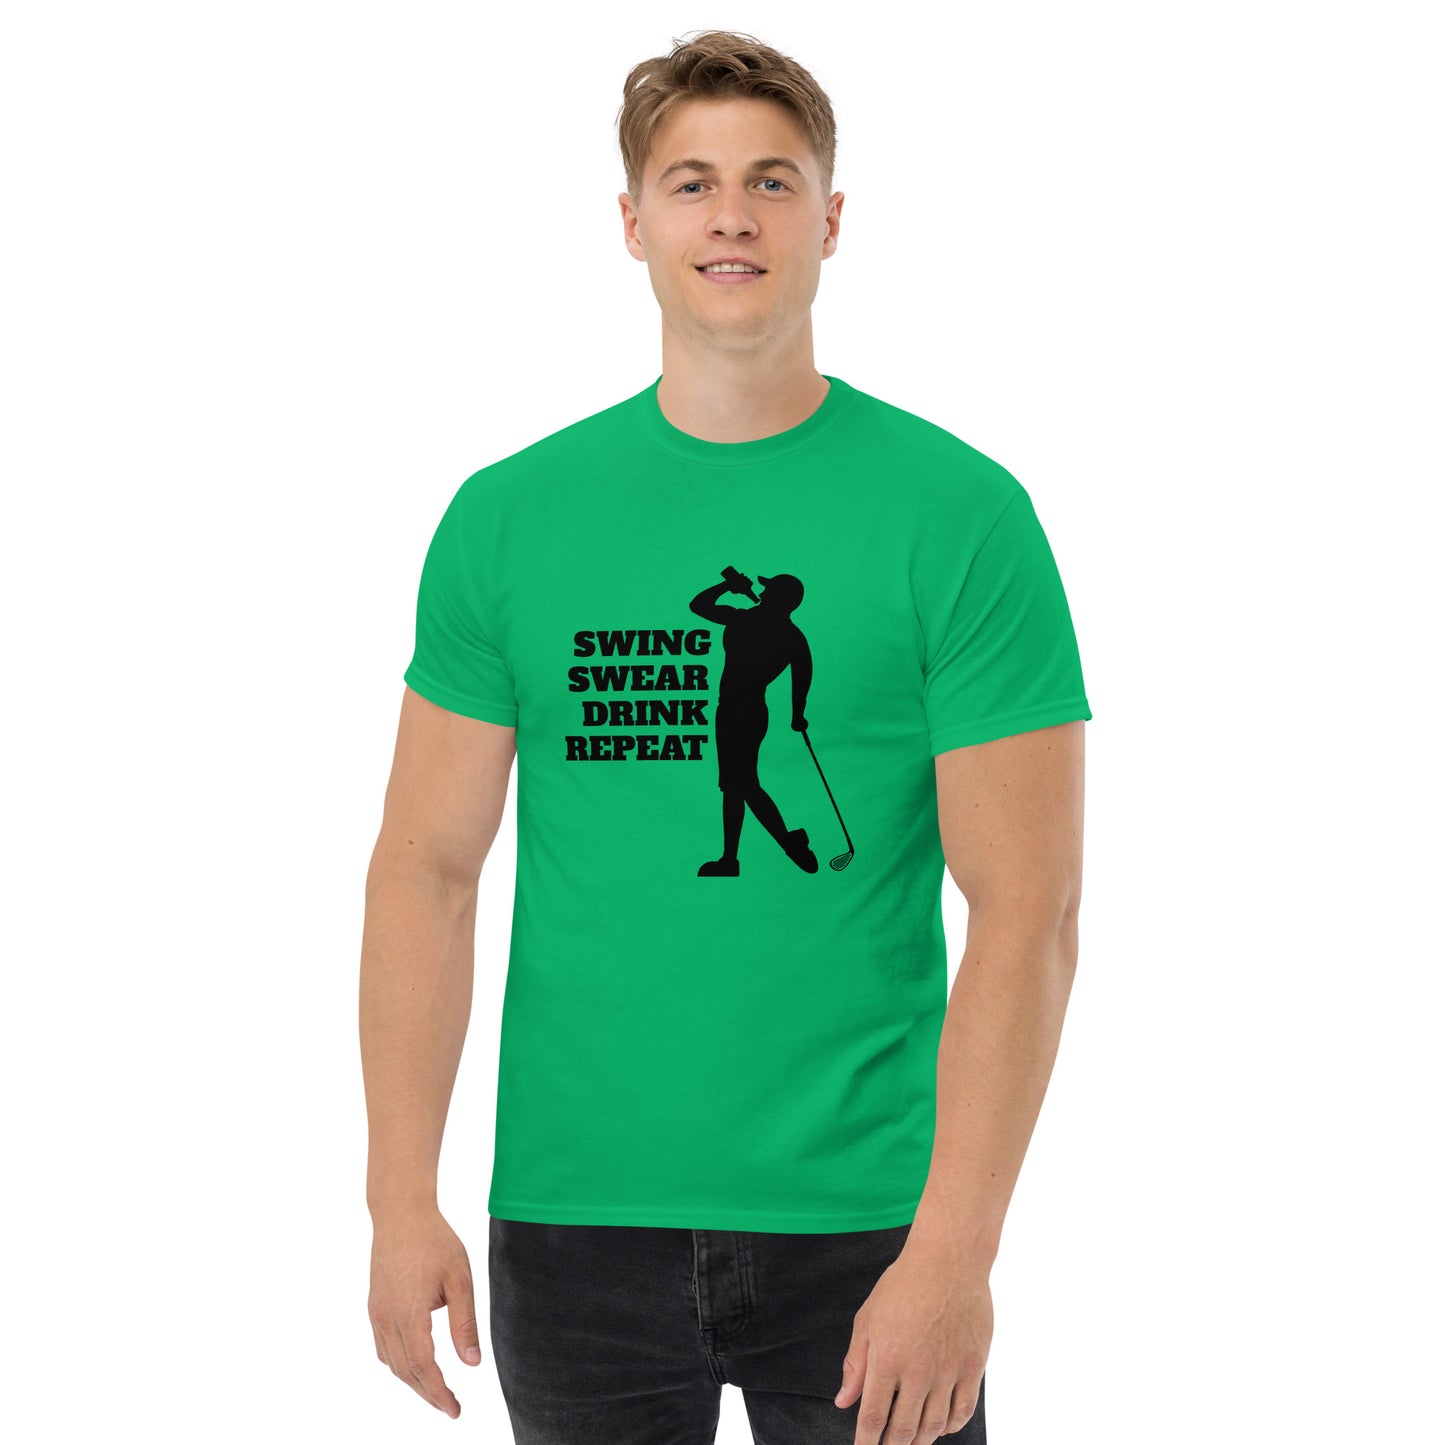 Swing, Swear, Drink, Repeat Man T-Shirt